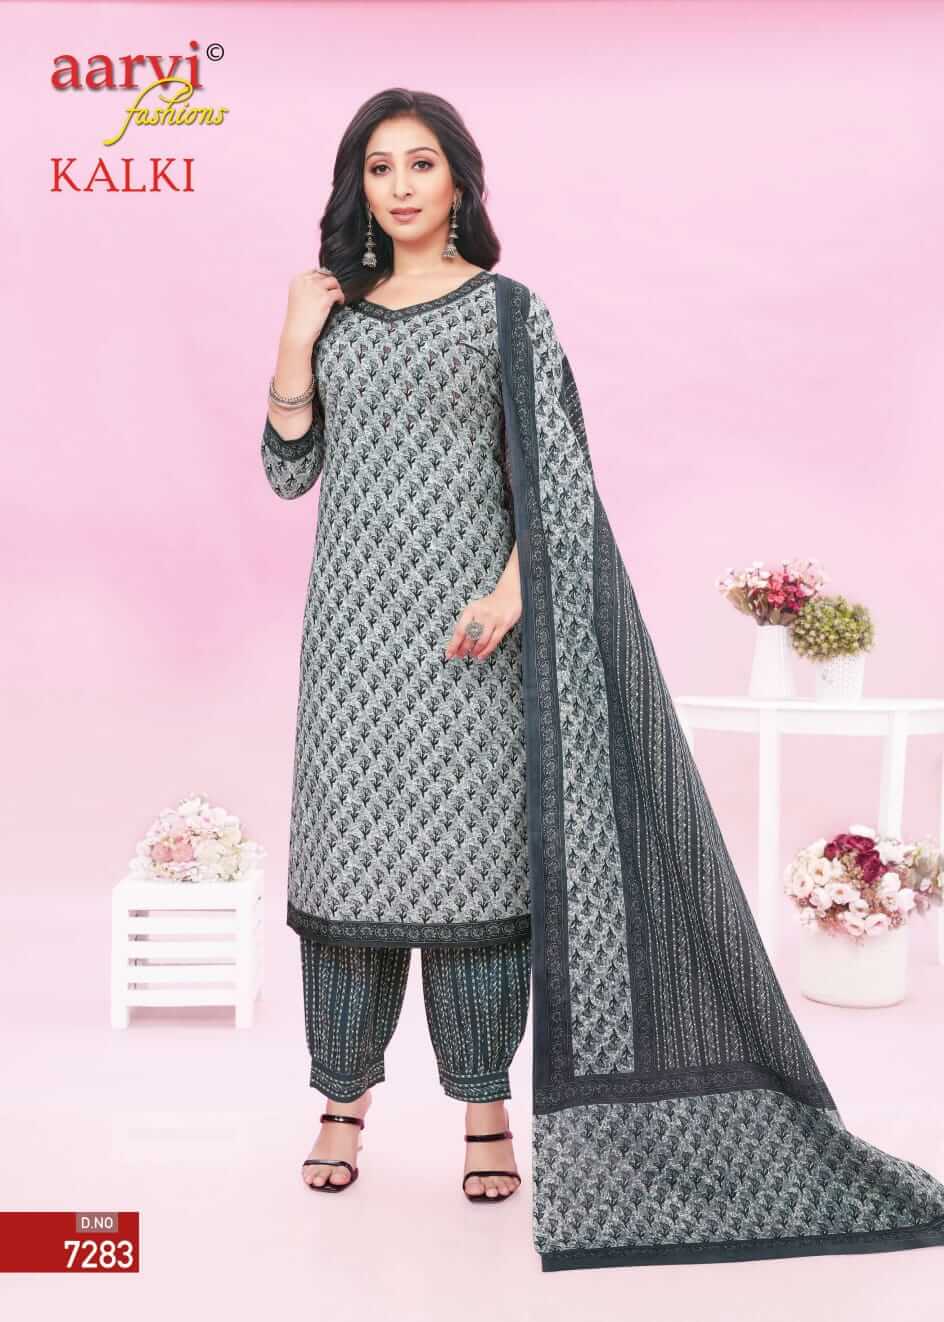 Aarvi Fashion Kalki vol 2 Cotton Salwar Kameez collection 9